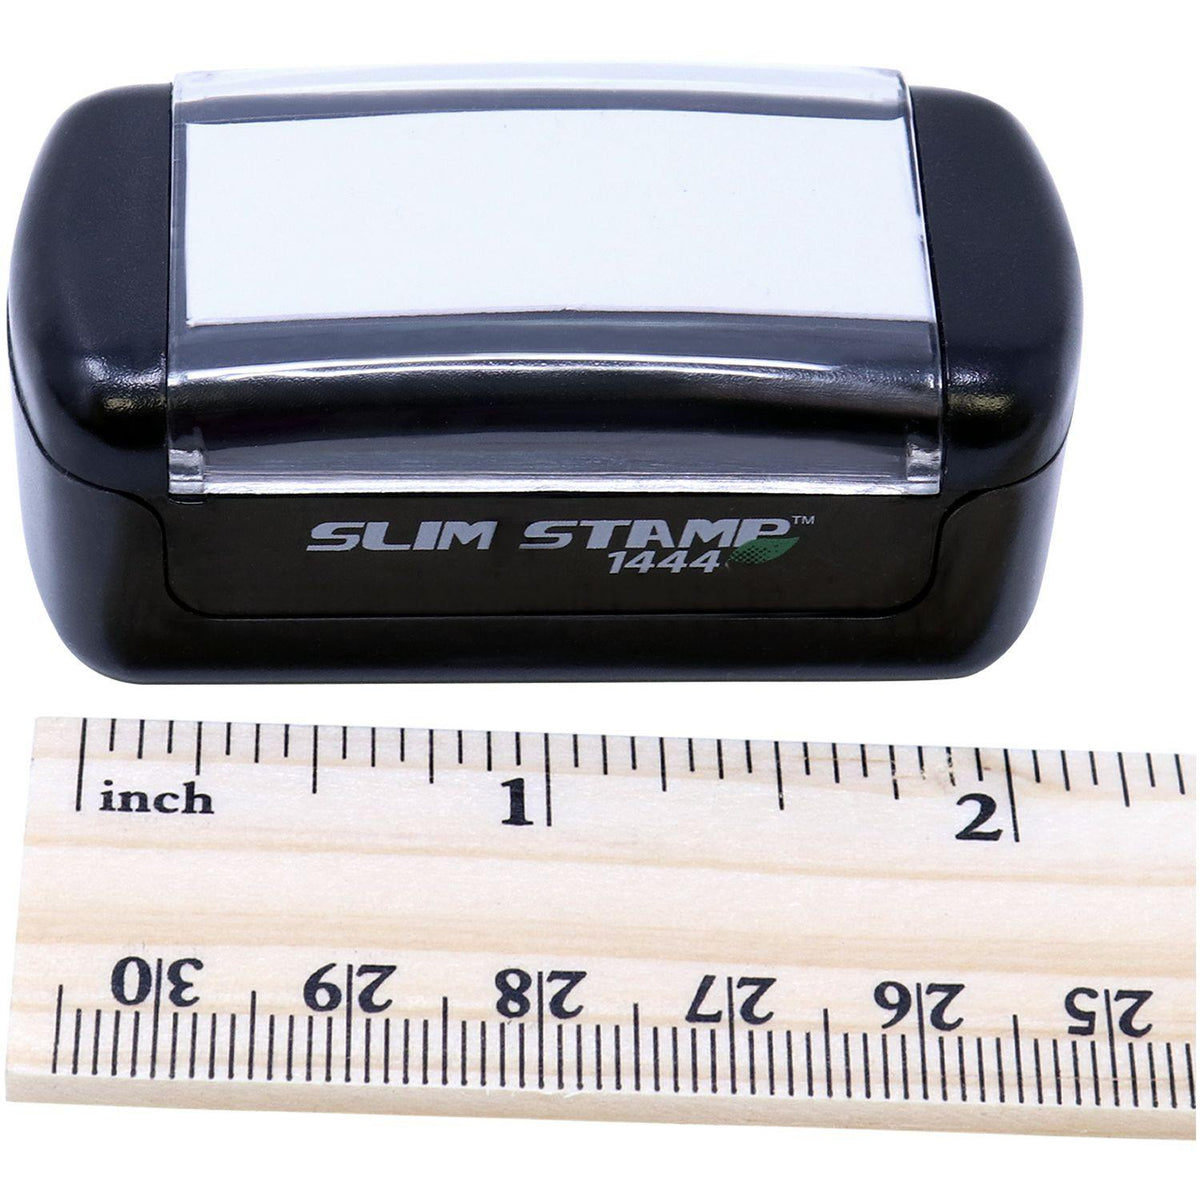 Measurement Slim Pre-Inked Priority Mail International Stamp with Ruler